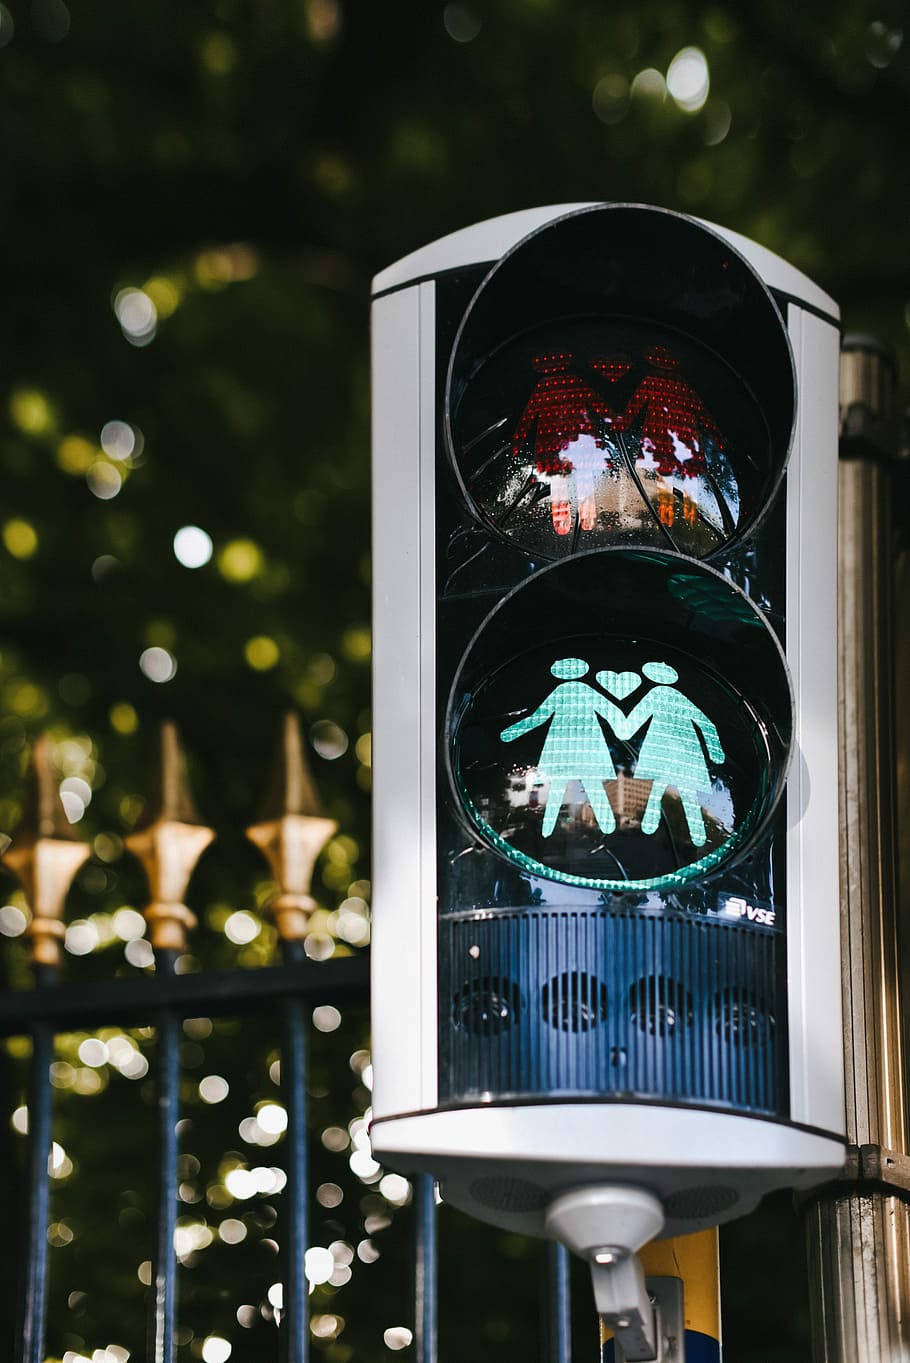 gray traffic light showing green light, closeup photo traffic light, HD wallpaper